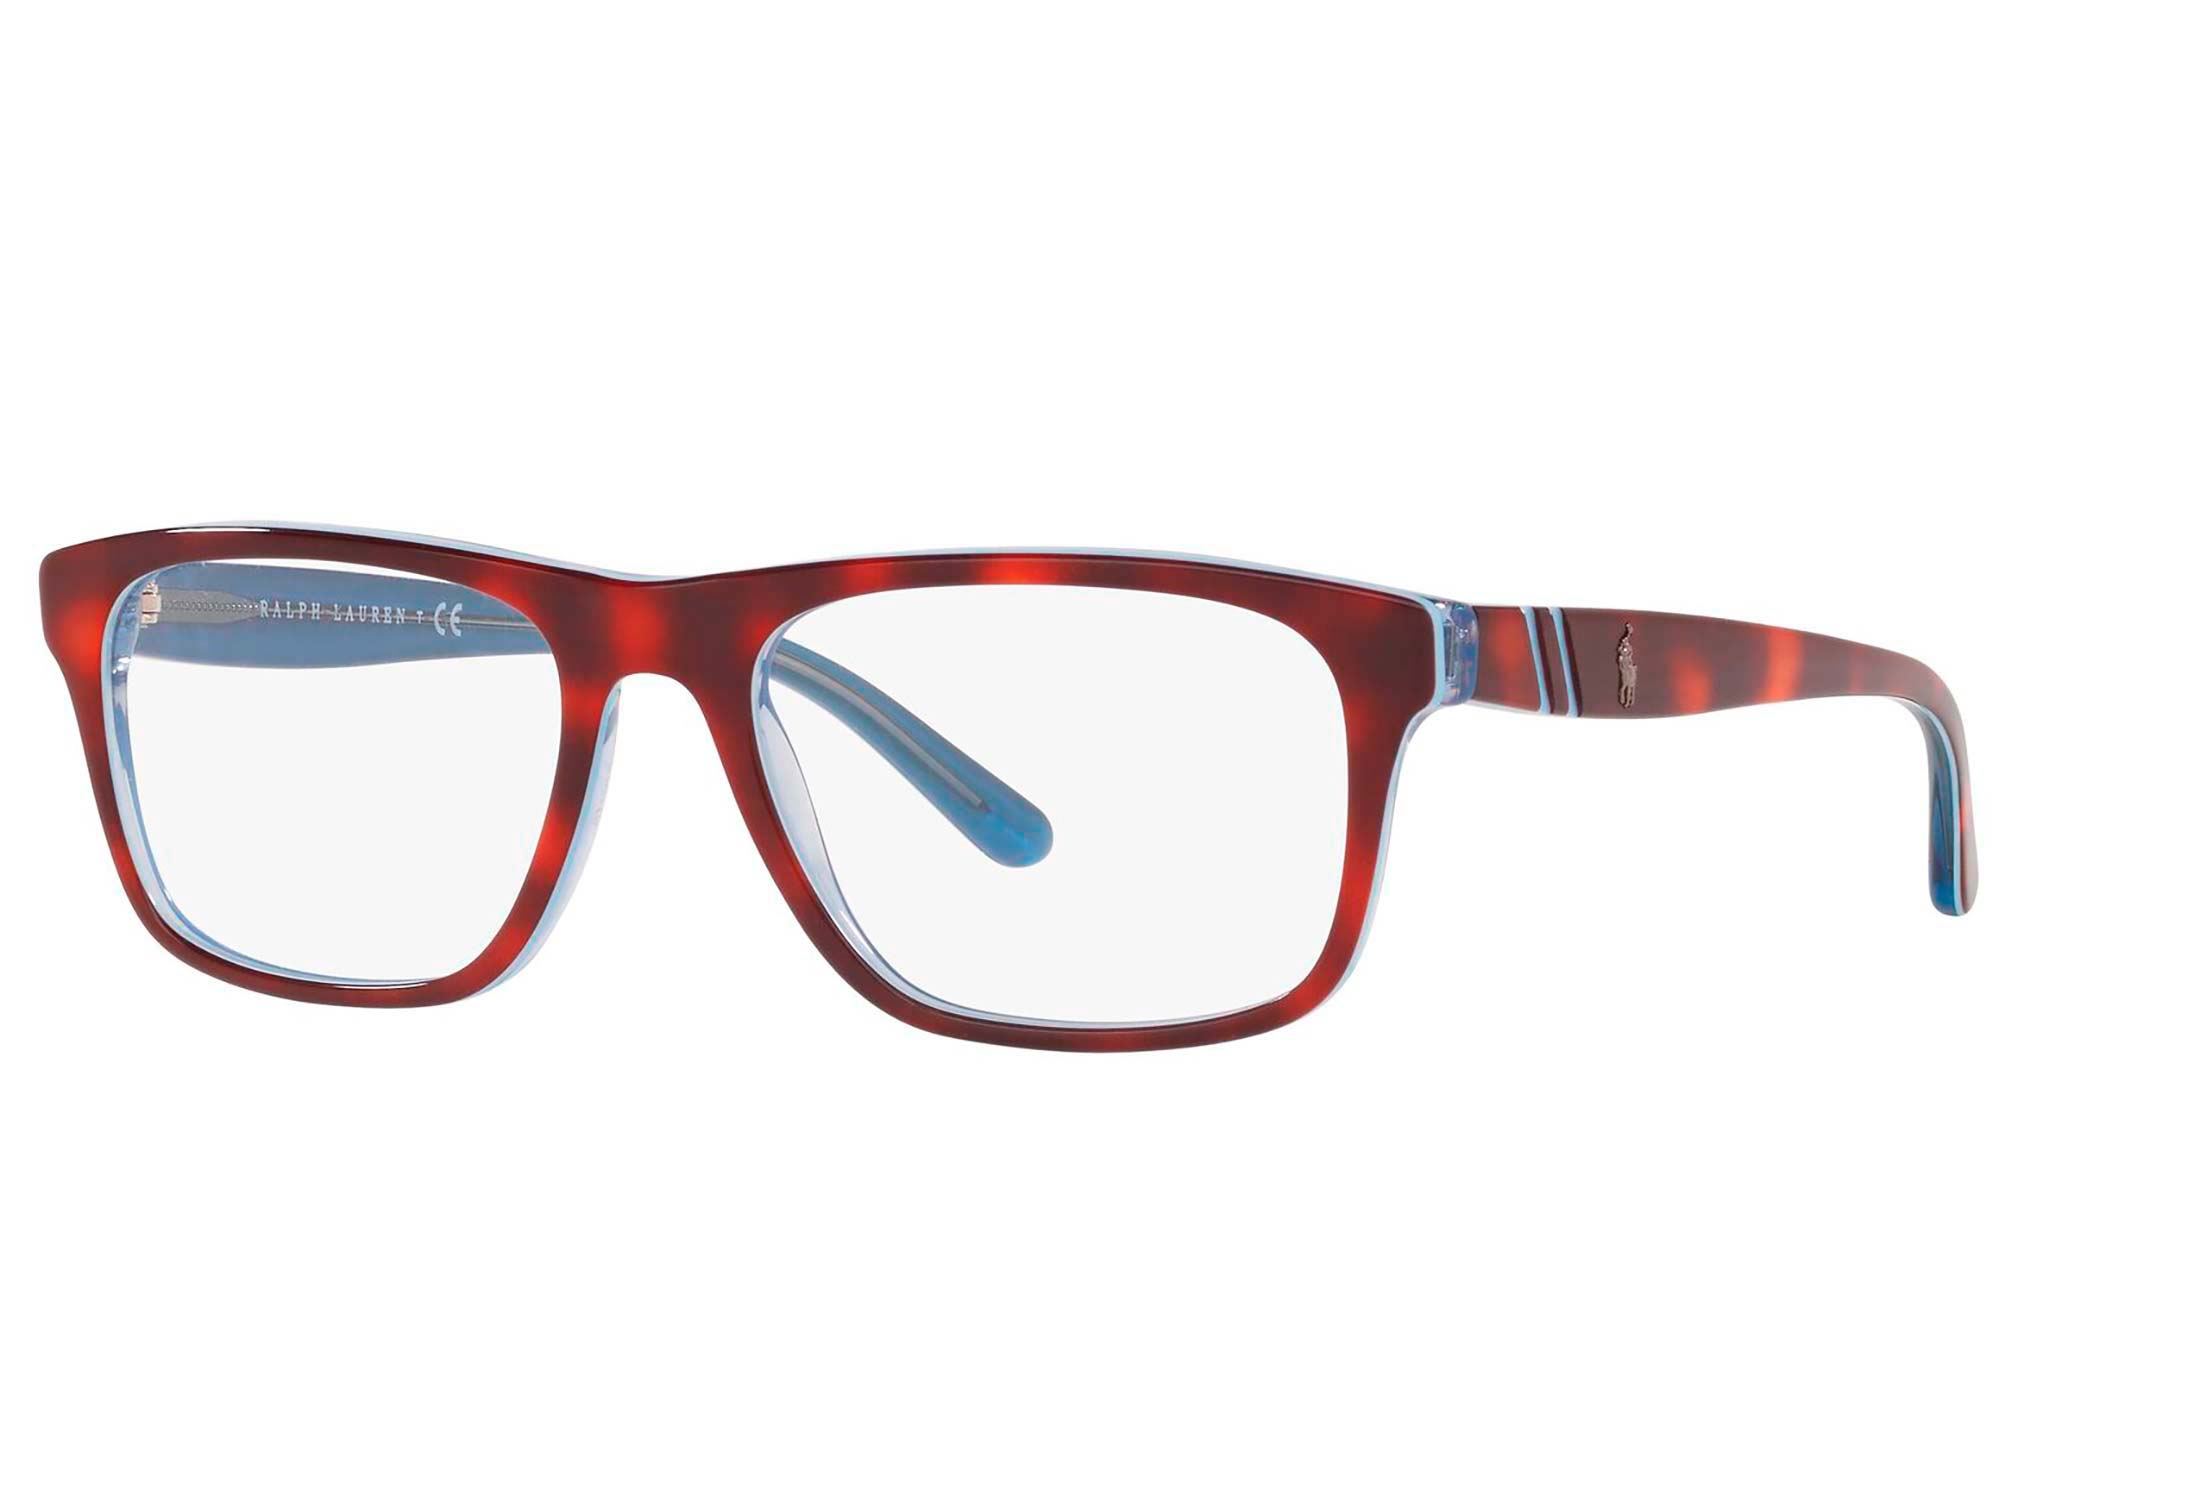 Polo briller - ph2211 5786 - Rød, Mønstret, Blå, Medium Hel ramme i Plast - Rektangulære